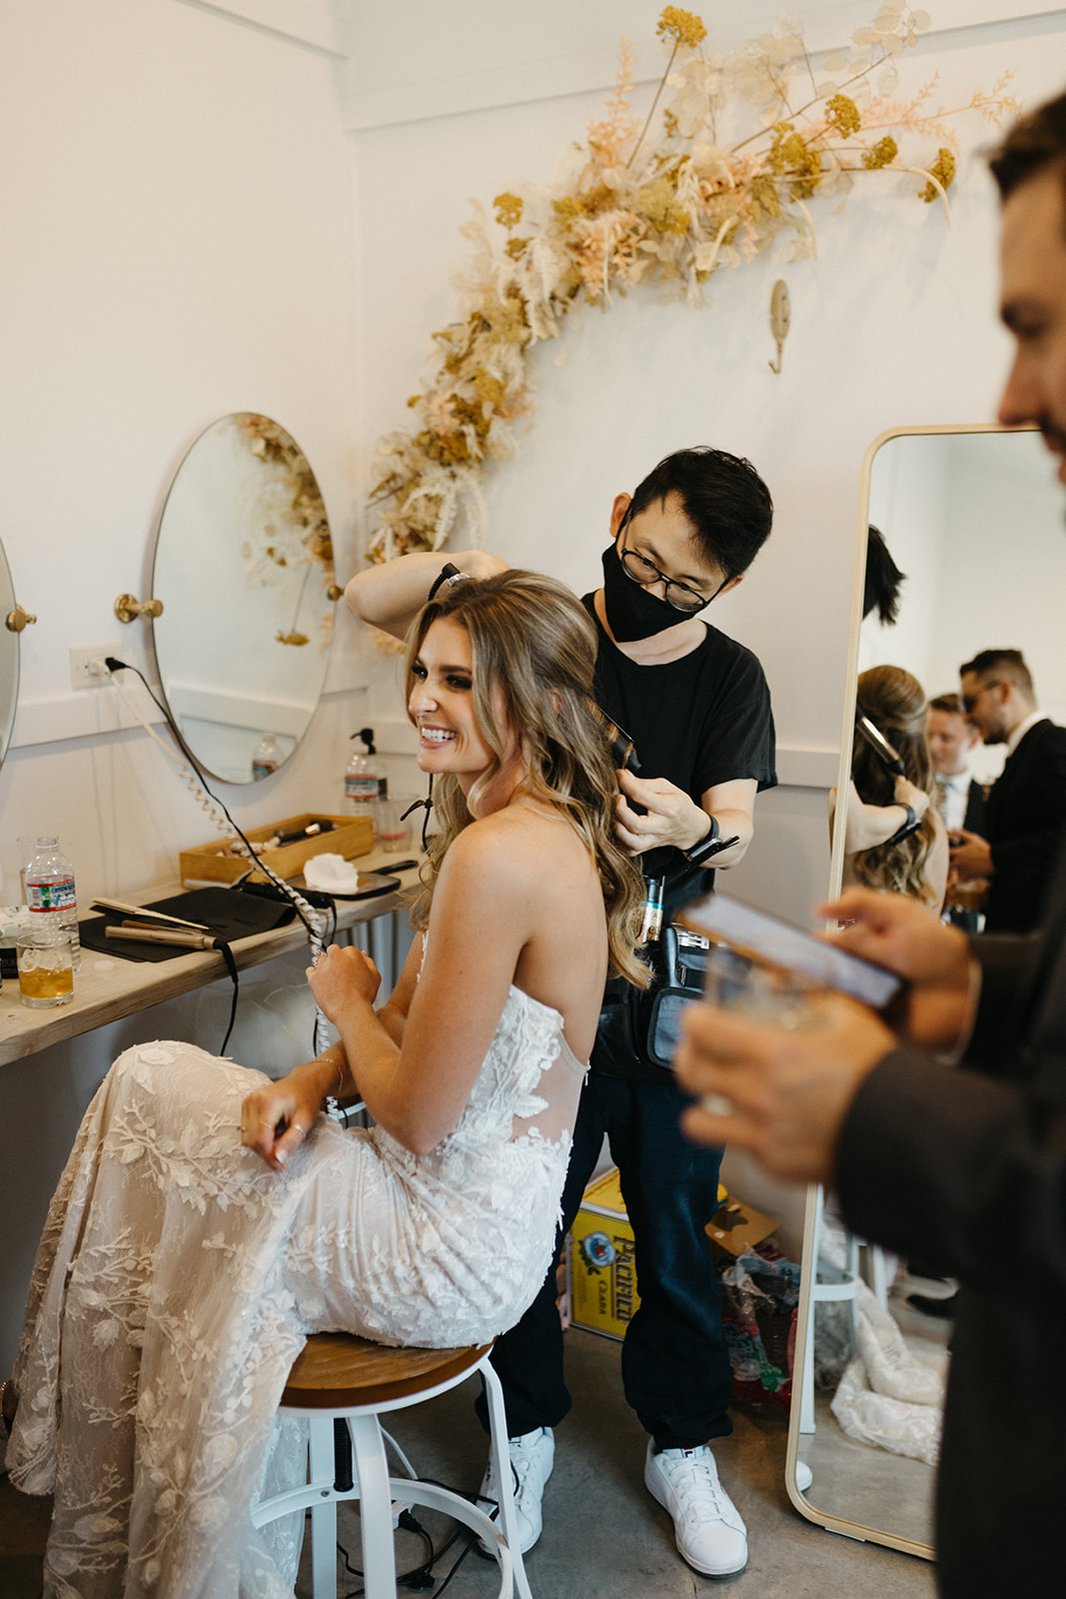 Asian wedding hairstylist working on gorgeous bride's hair.